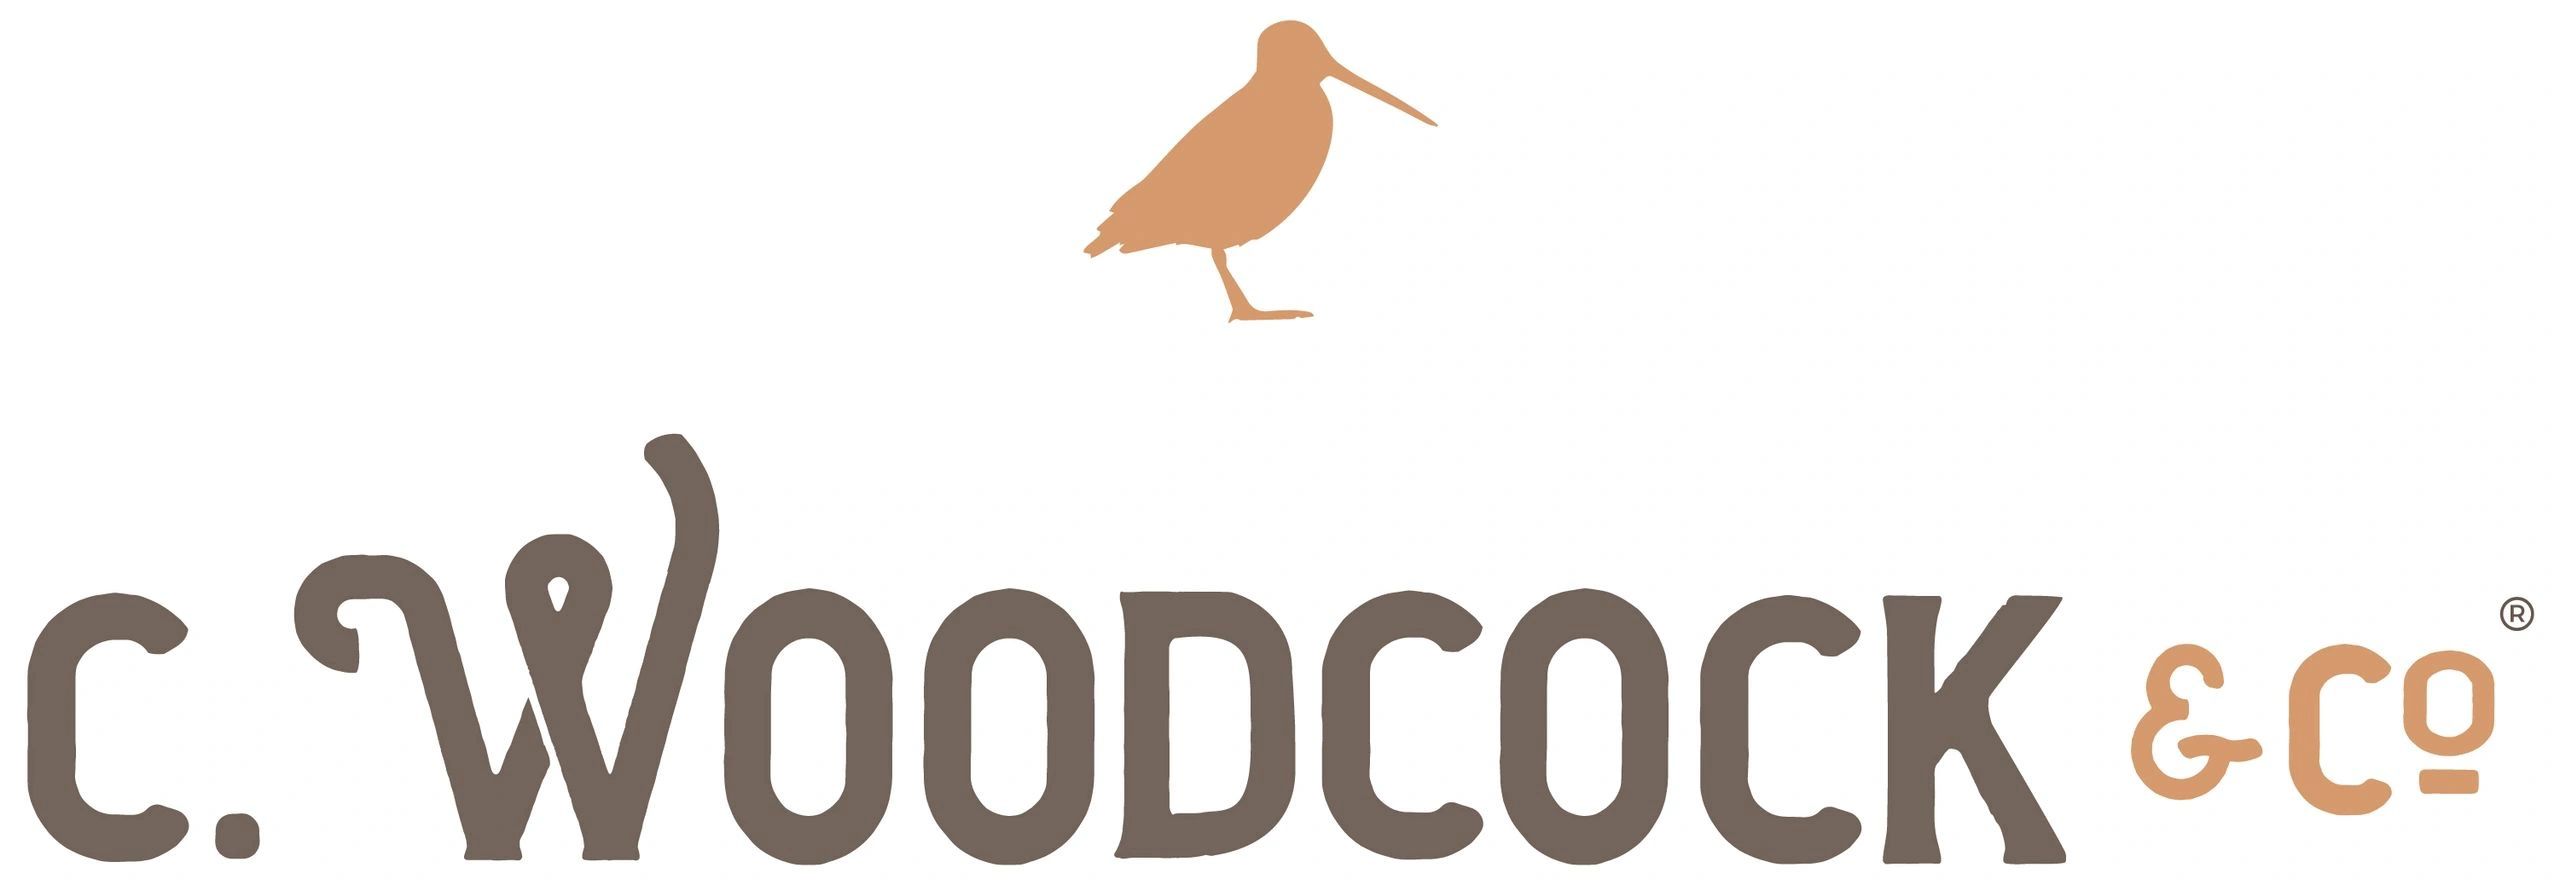 C. Woodcock & Co